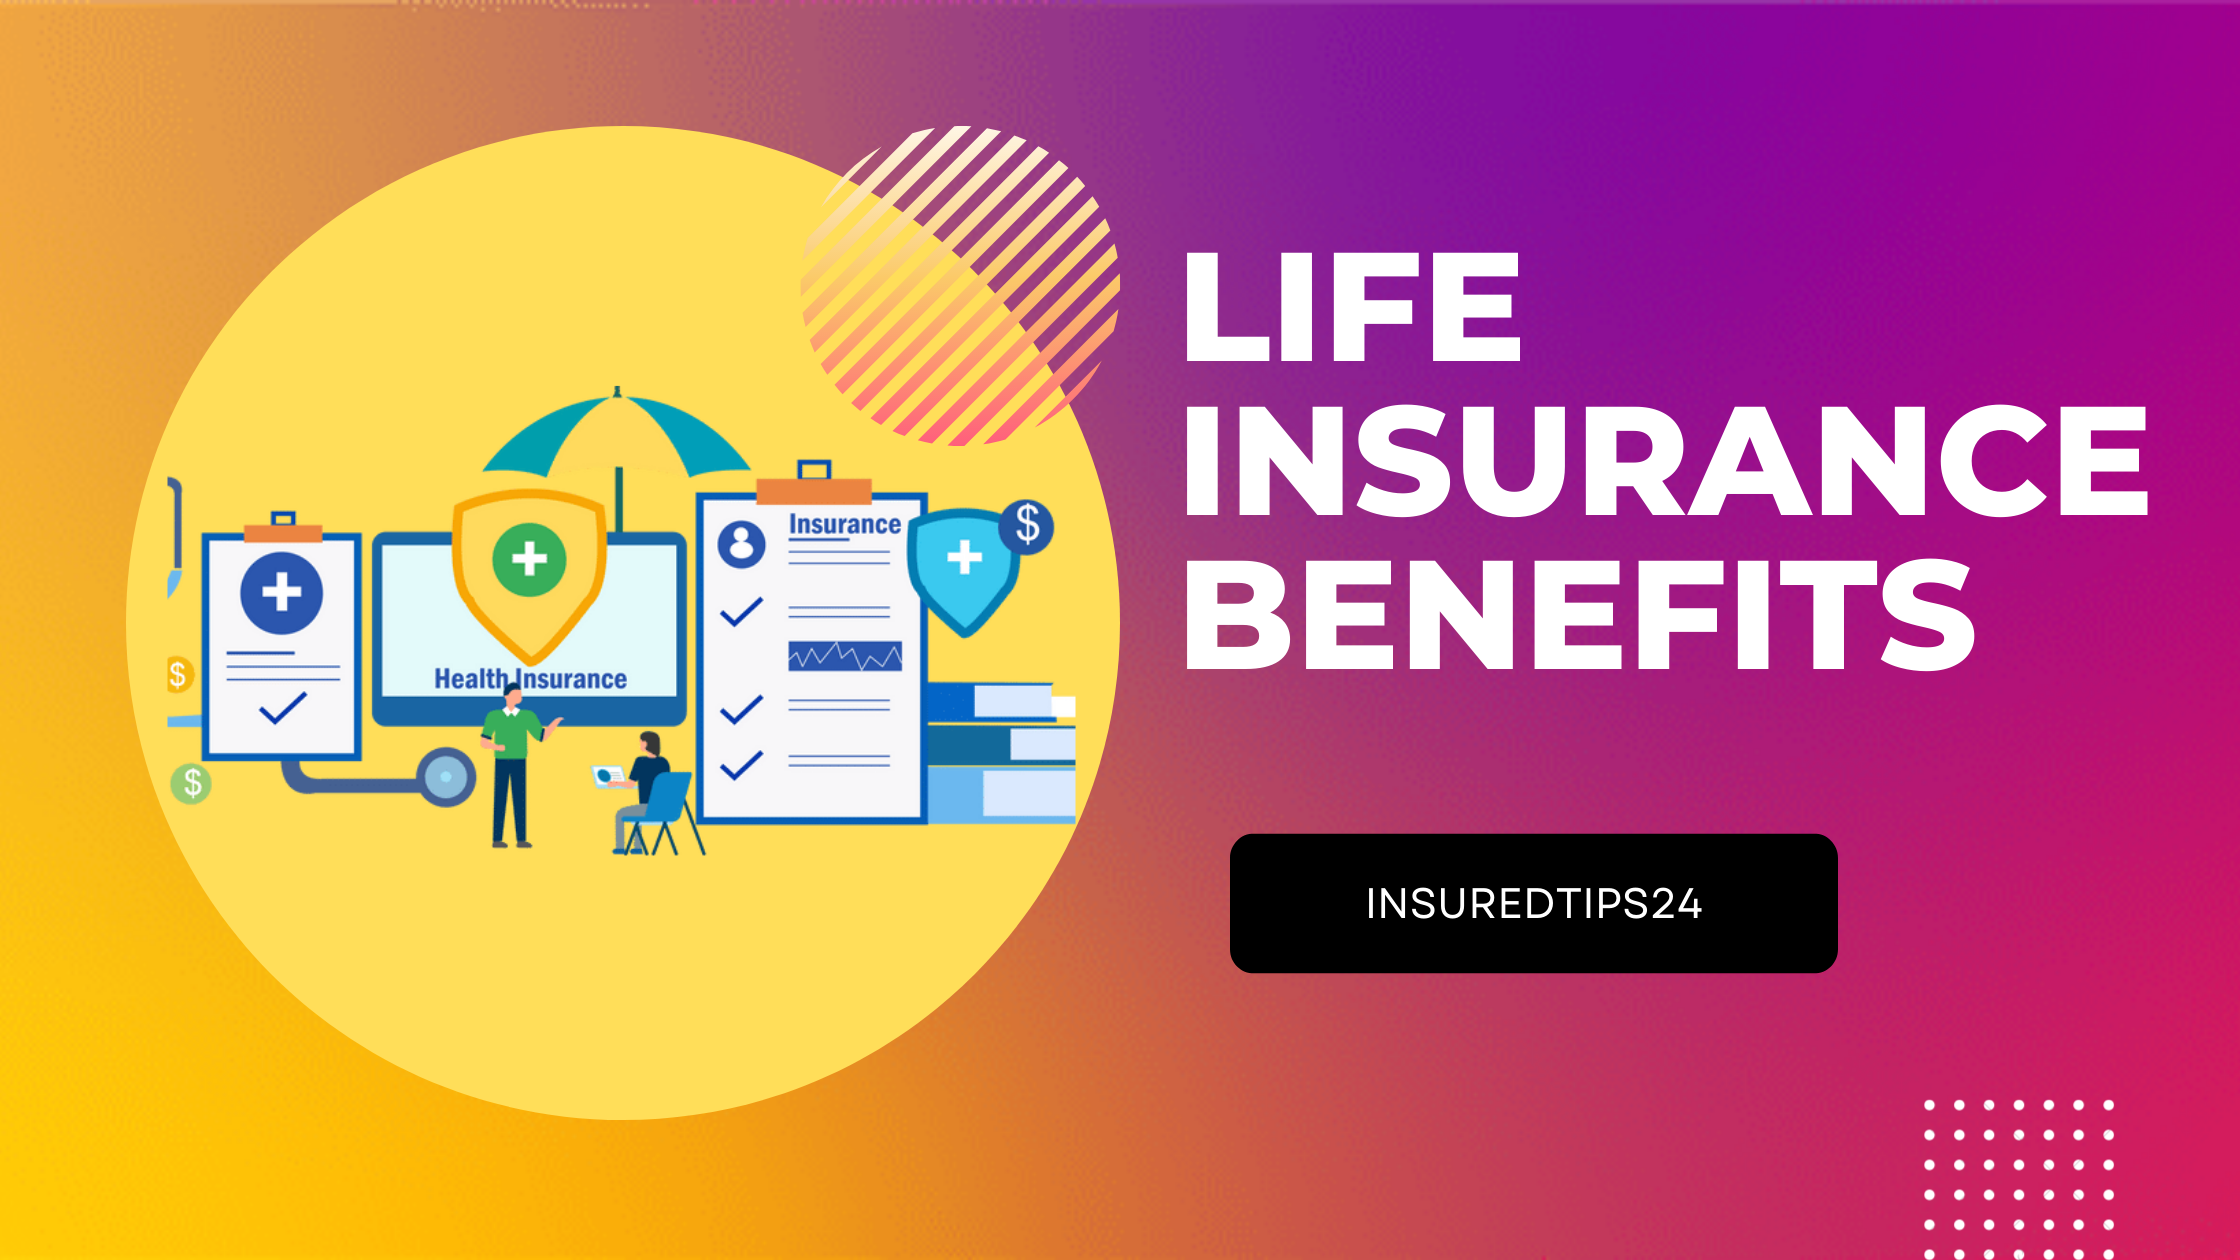 Life insurance benefits